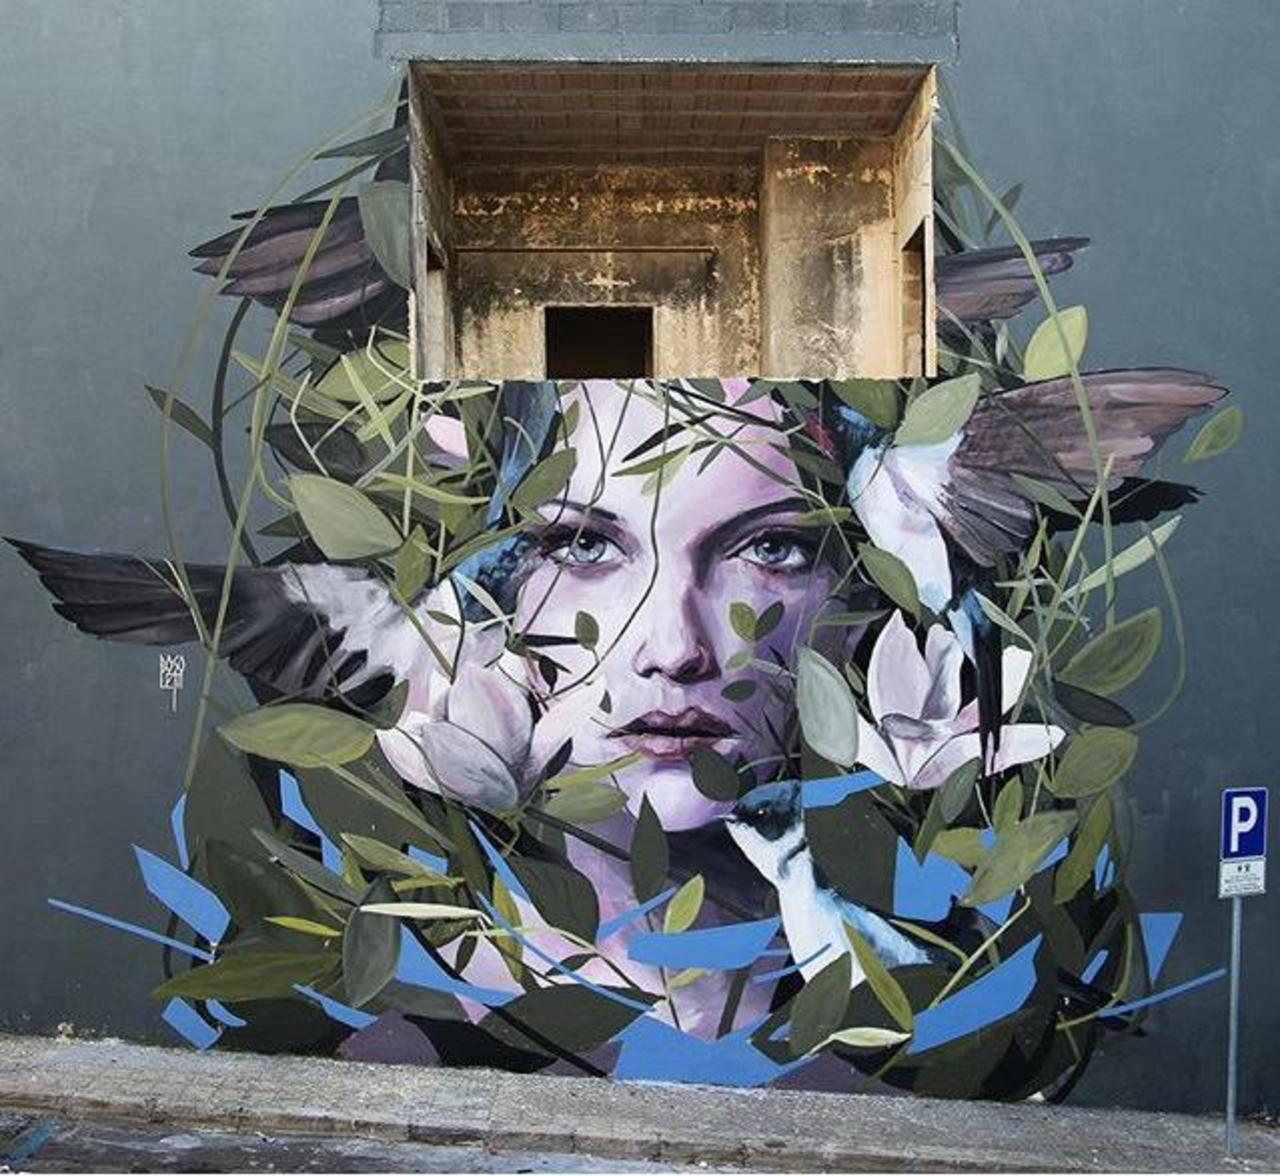 RT @jerome_coumet: Bosoletti - Casarano, Italie
#art #graffiti #streetart http://t.co/c8j3oj4LPt
via @GoogleStreetArt